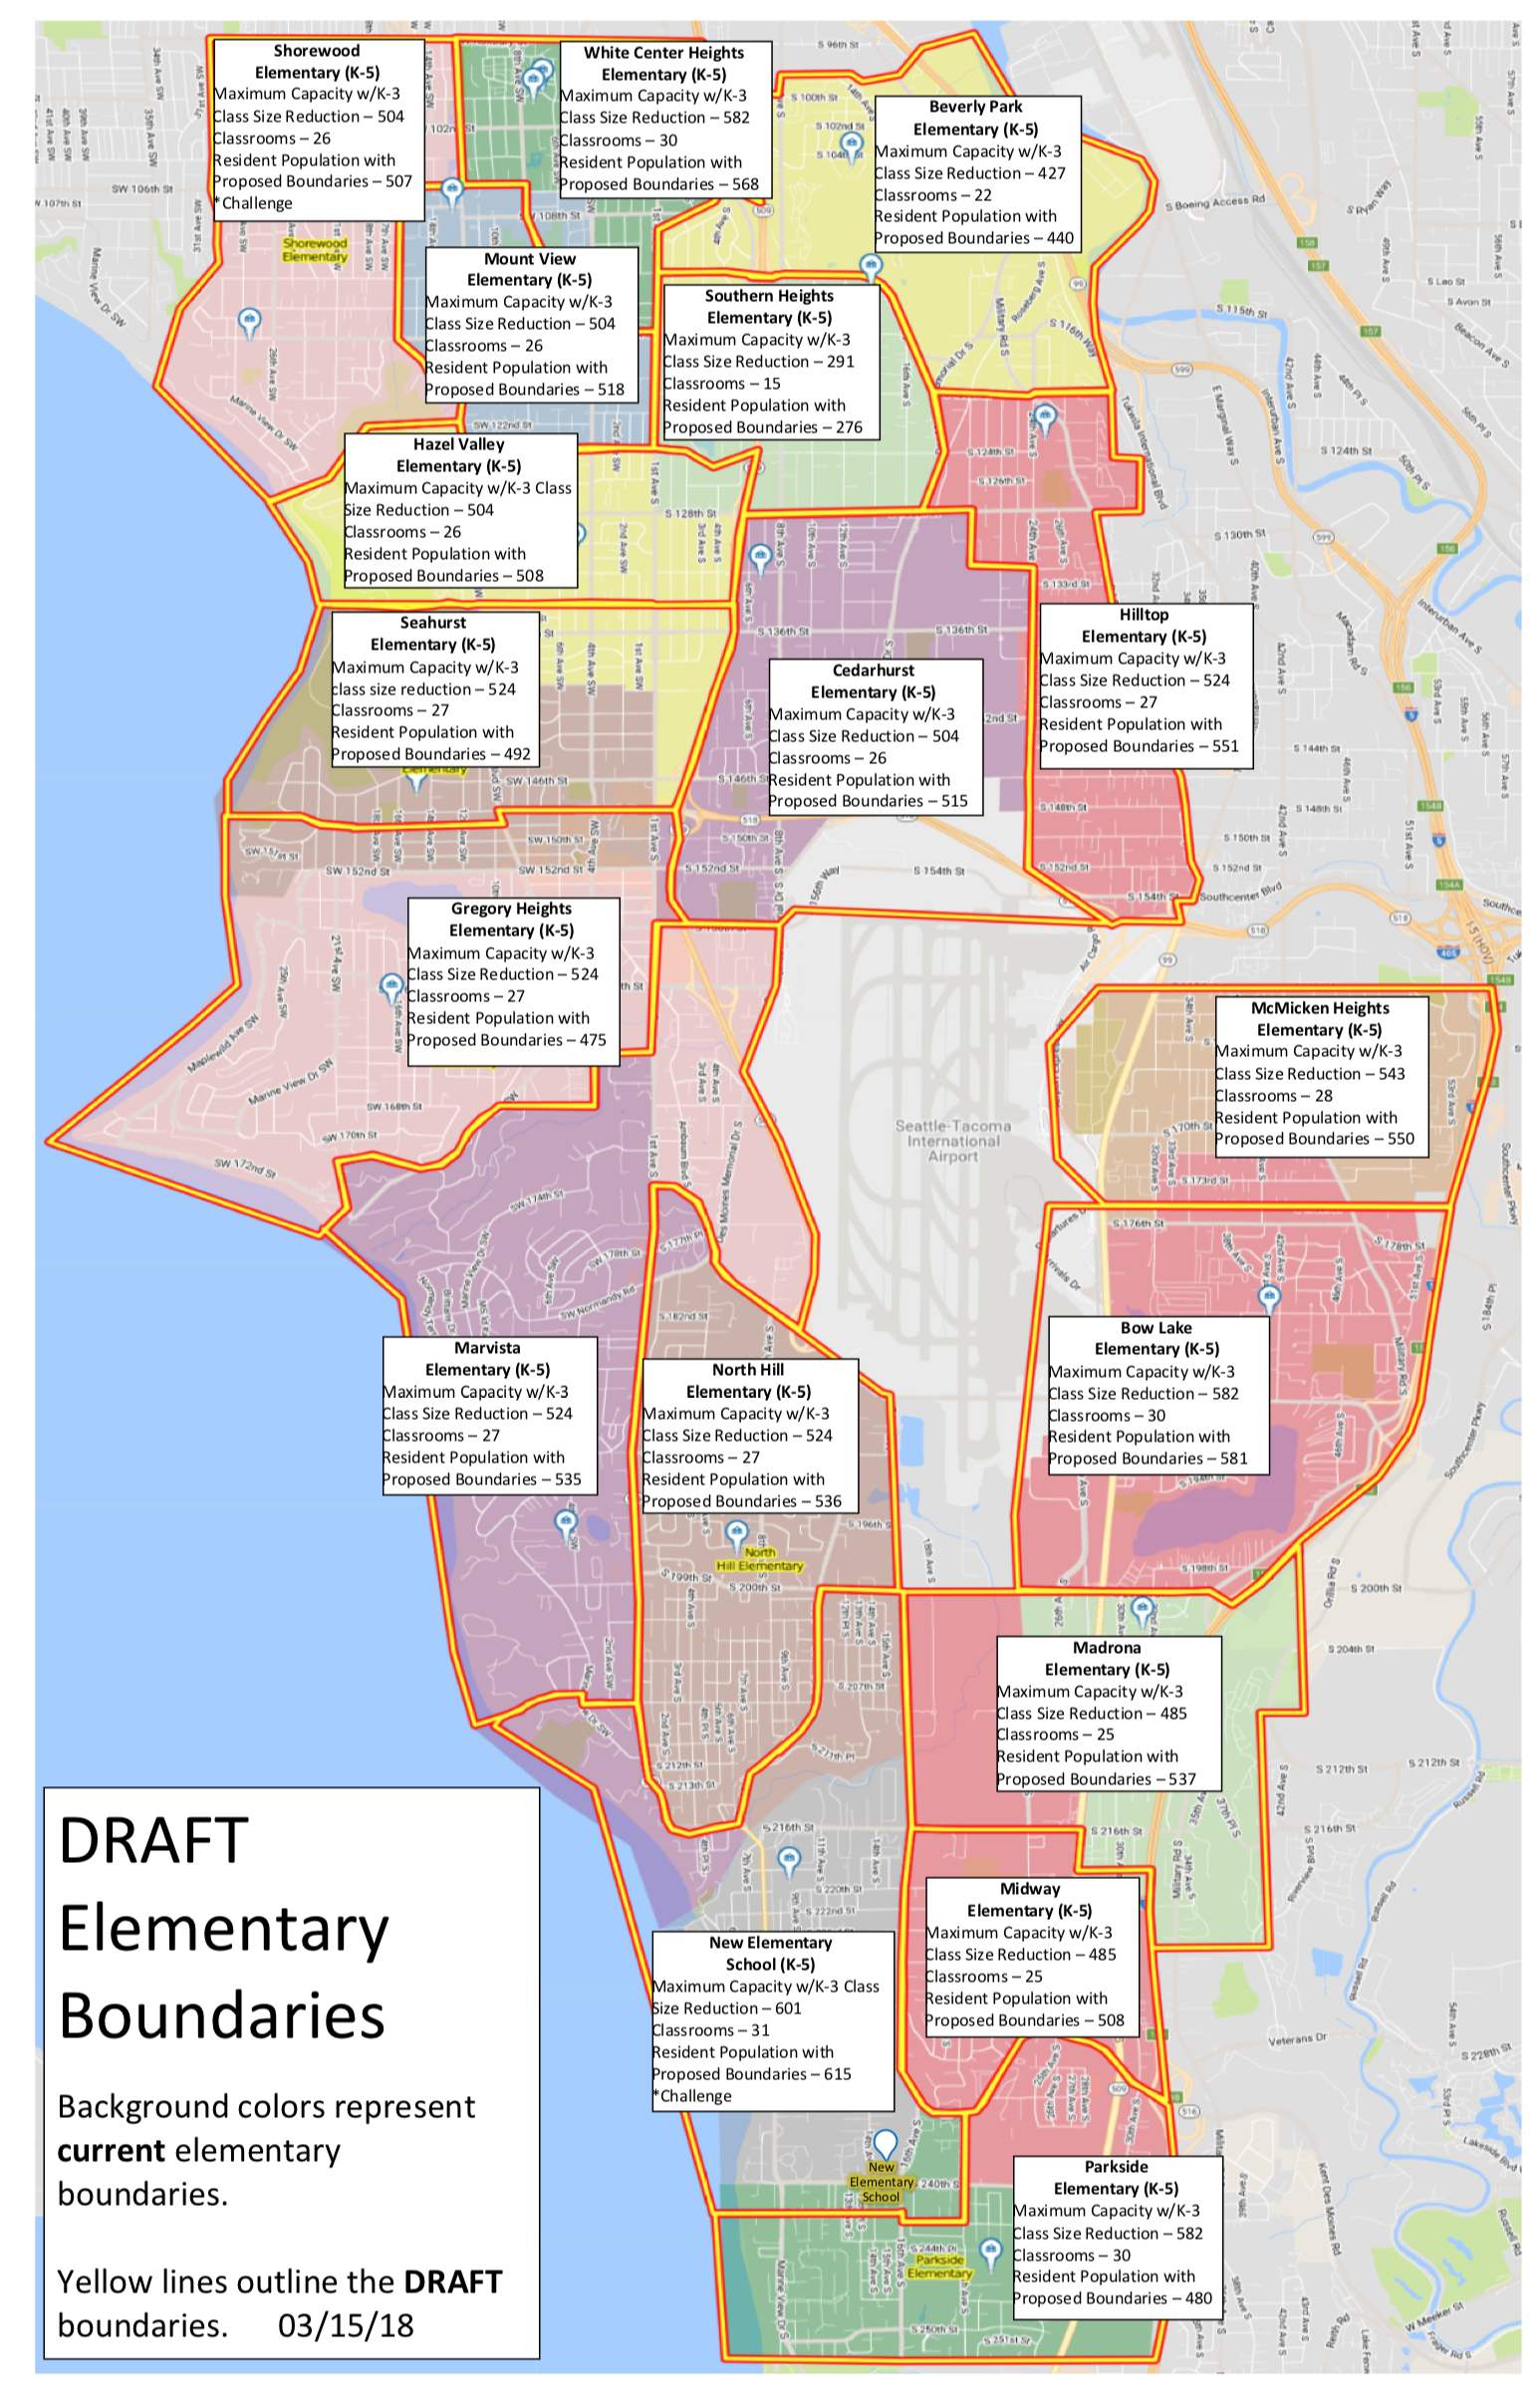 Draft Elementary School Boundaries. Highline Public Schools